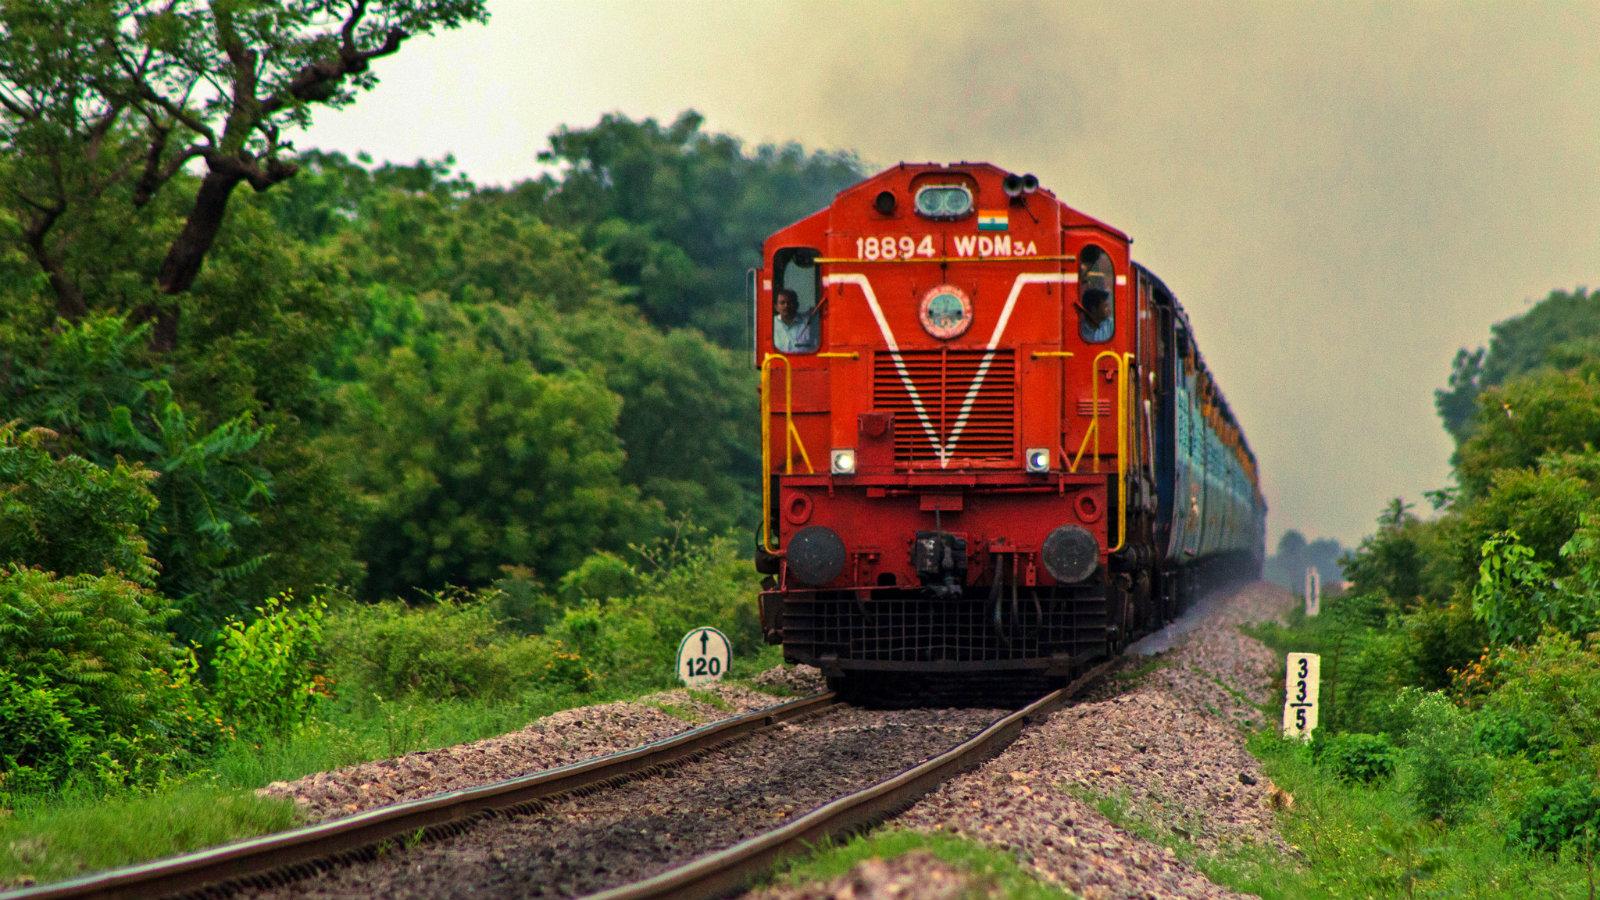 Train Wallpaper Indian Railway news today